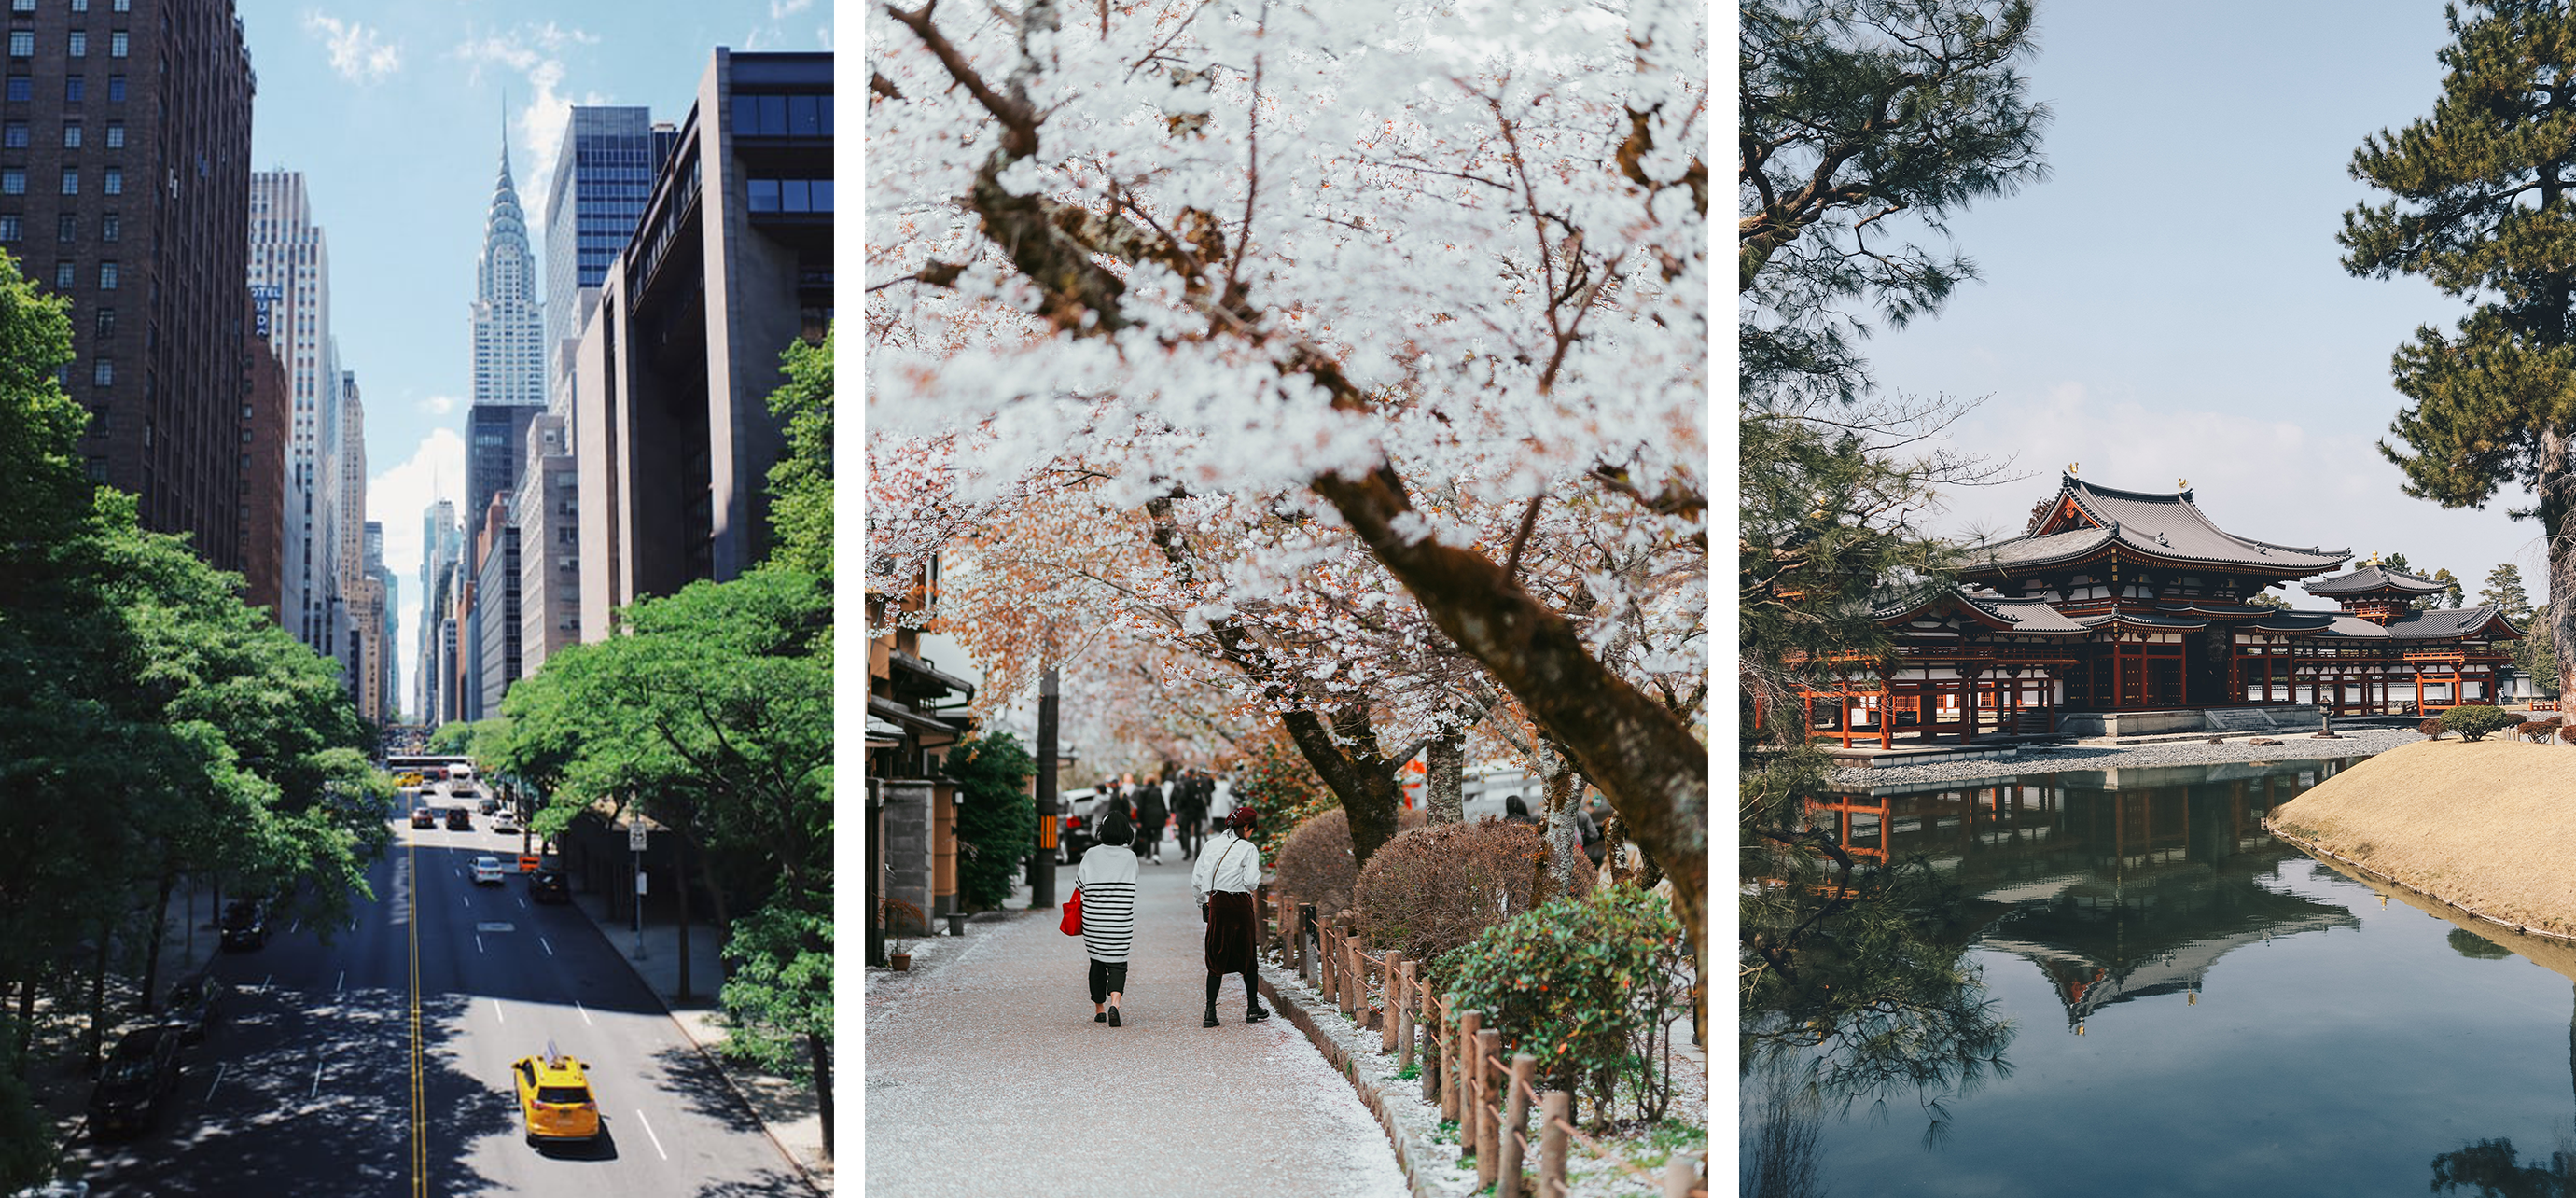 New York & Kyoto. Images: Unsplash